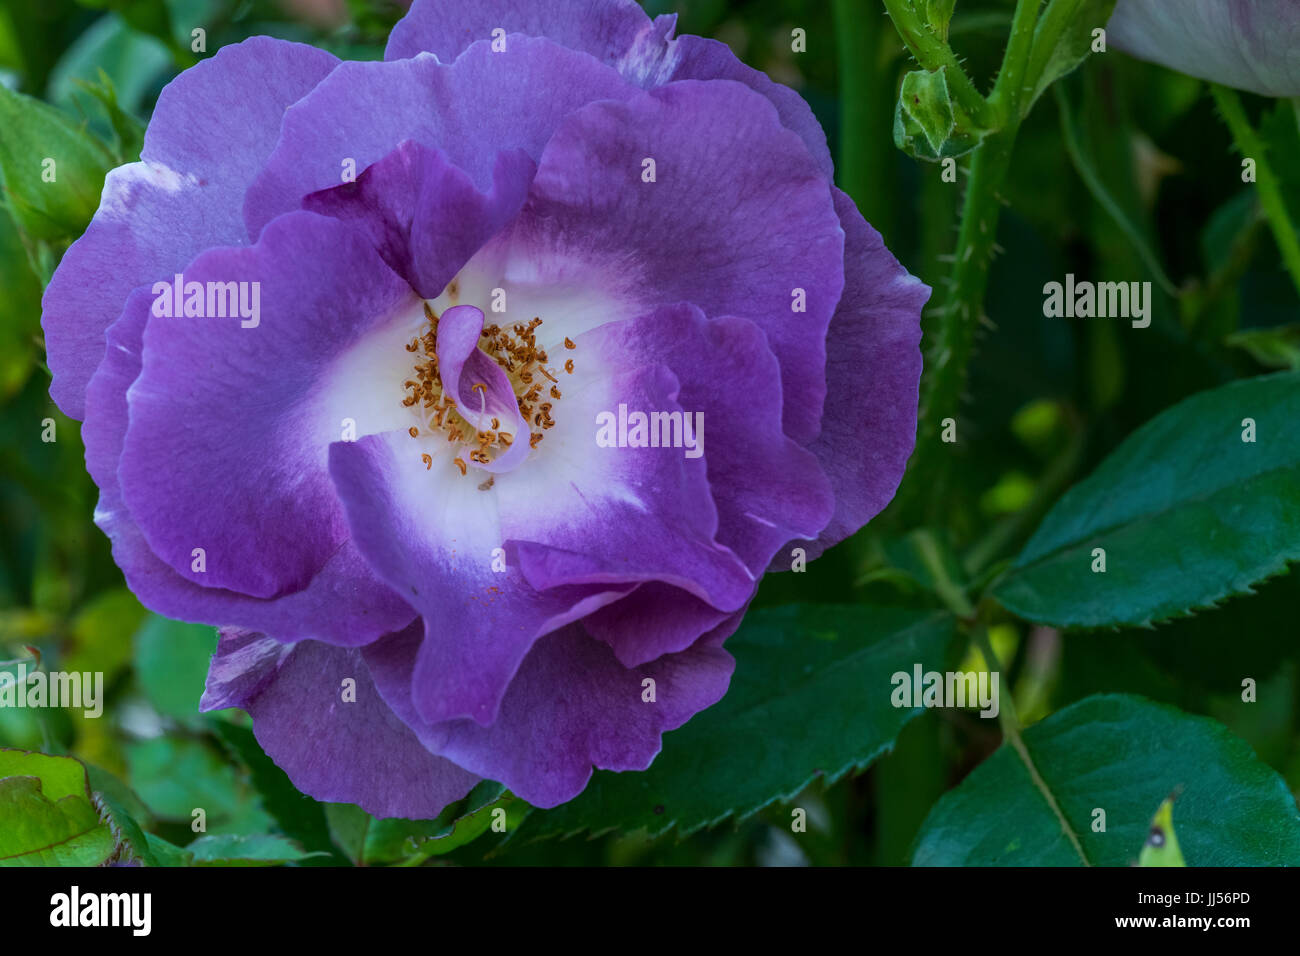 Blue Moon bush rose, in a garden setting. Stock Photo